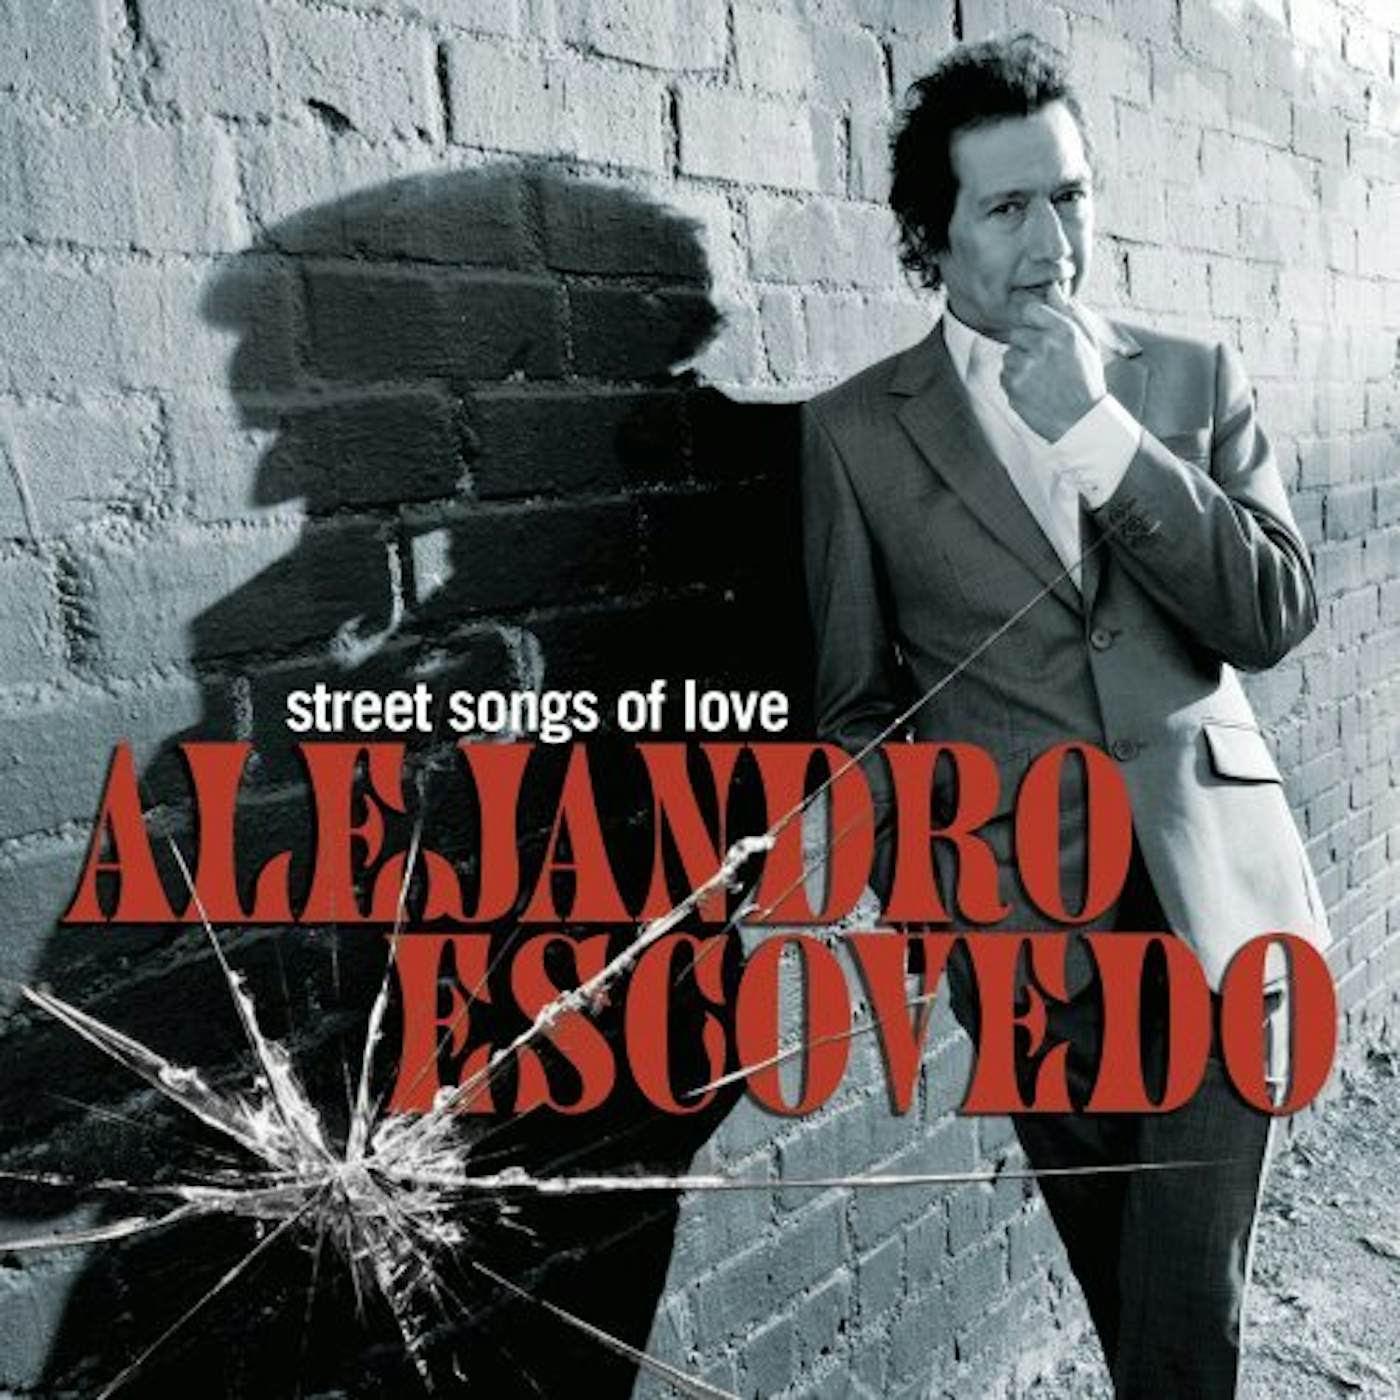 Alejandro Escovedo STREET SONGS OF LOVE CD